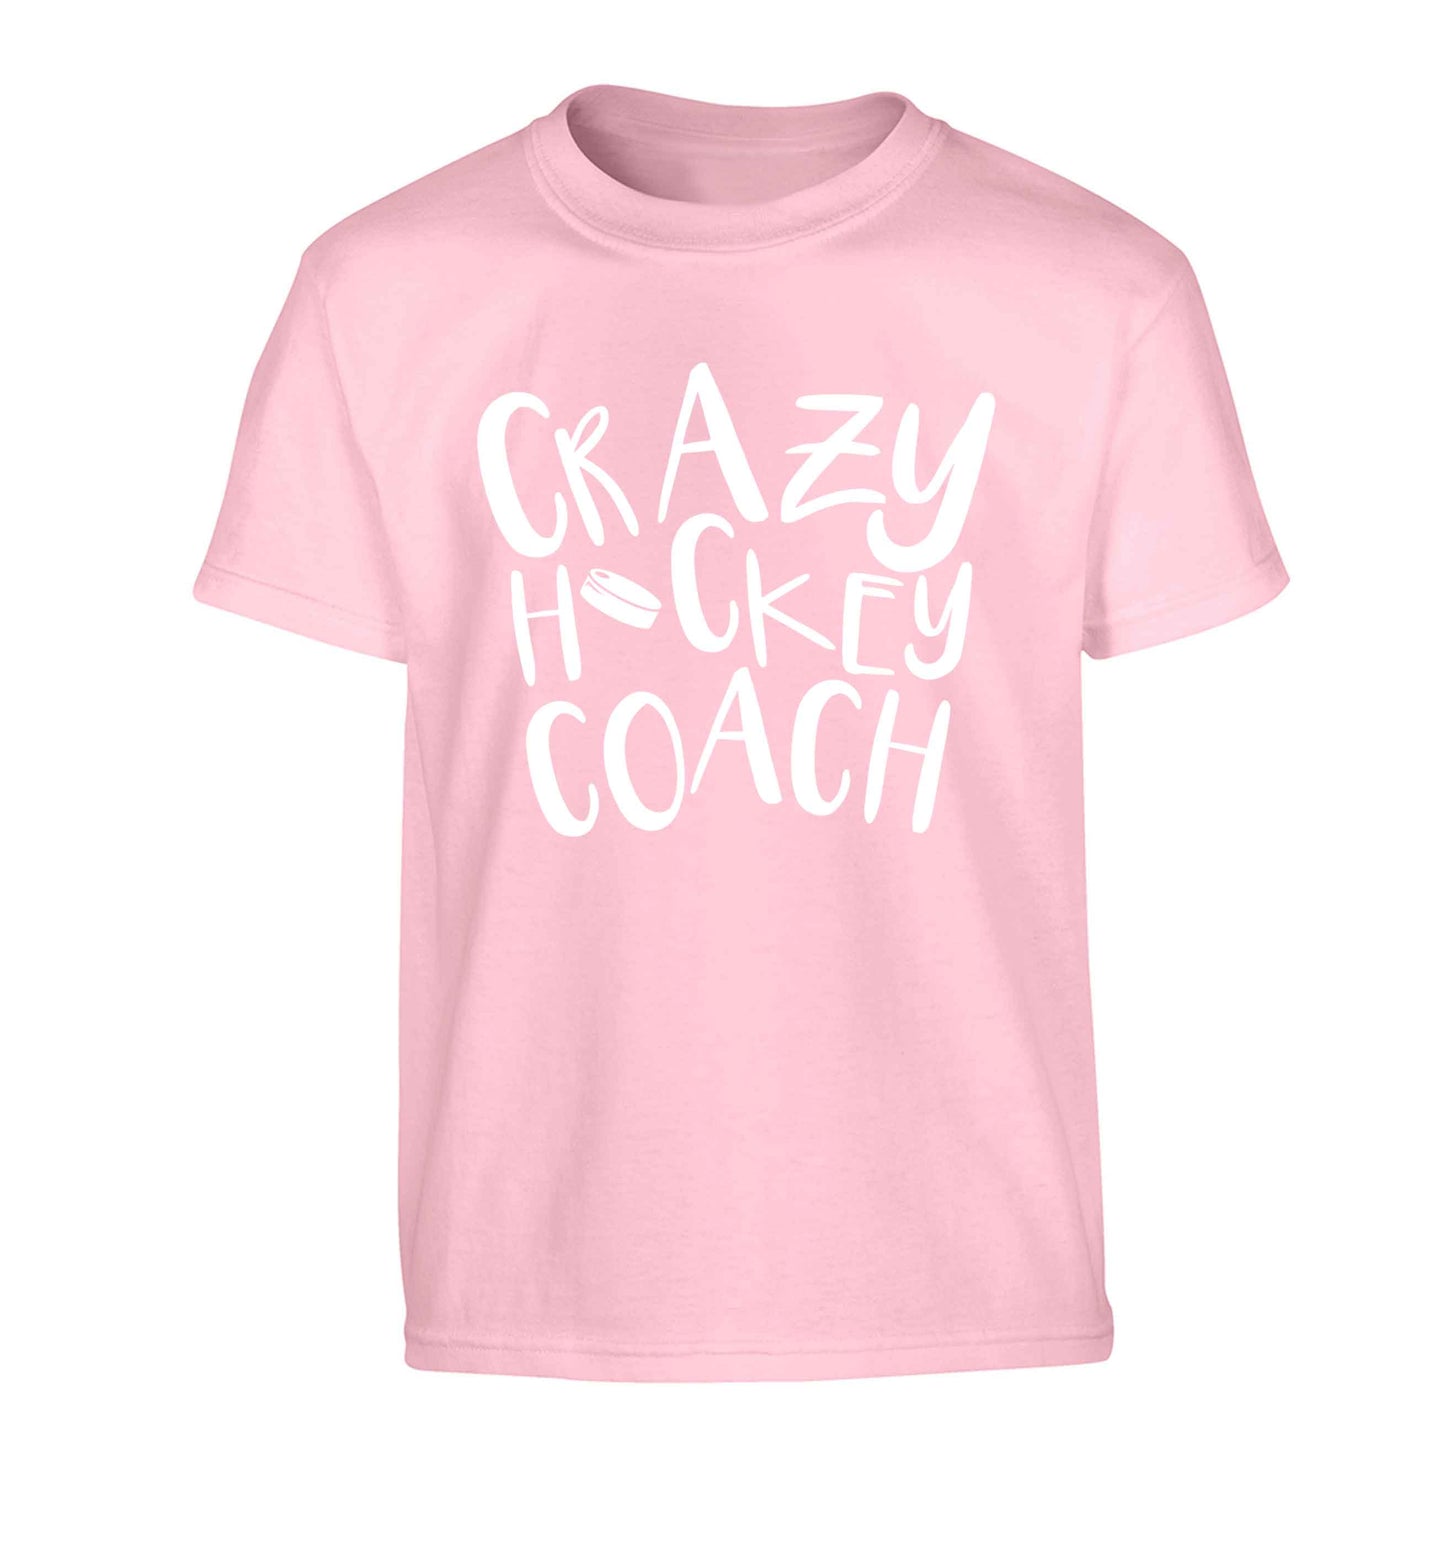 Crazy hockey coach Children's light pink Tshirt 12-13 Years